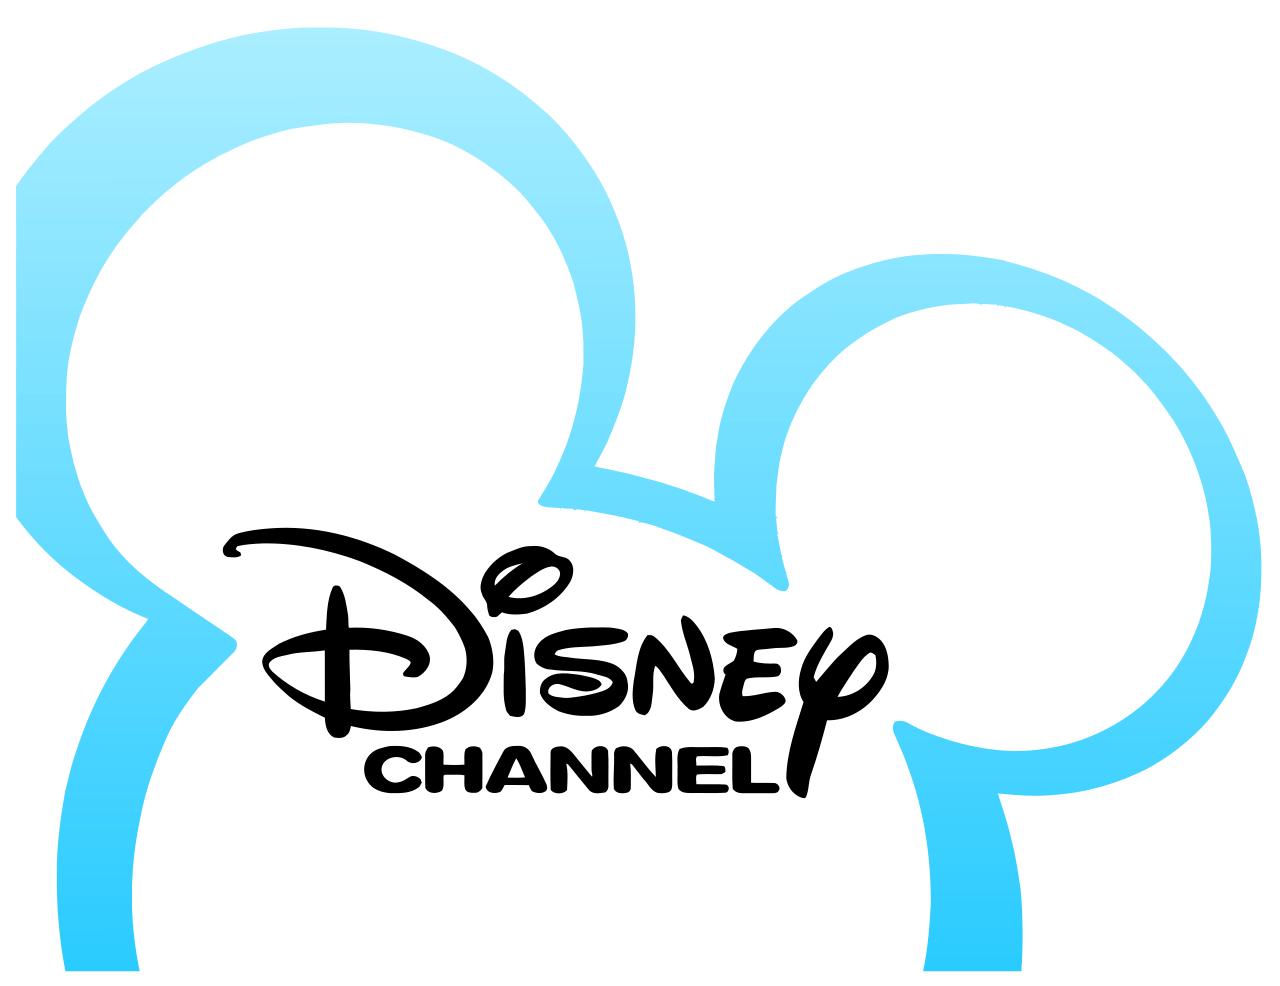 Disneychannel.com Logo - File:Disney Channel logo.svg - Wikimedia Commons